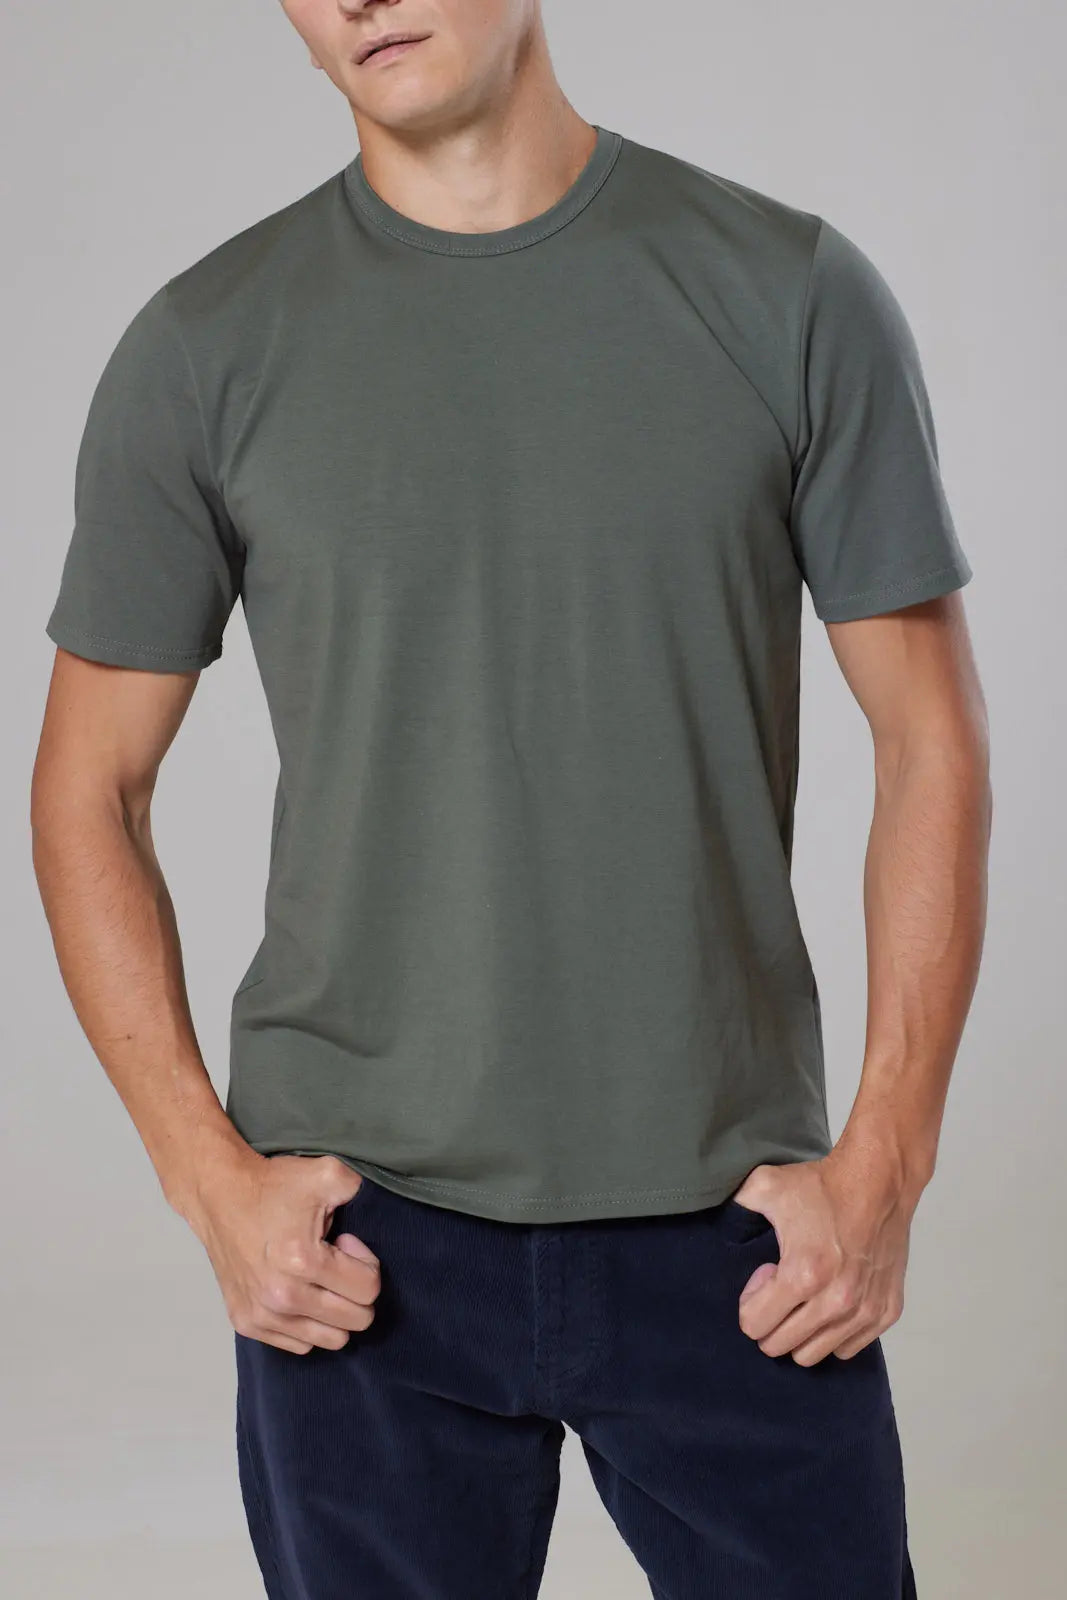 Trueman Short Sleeve Tee Shirt - Olive Wear London